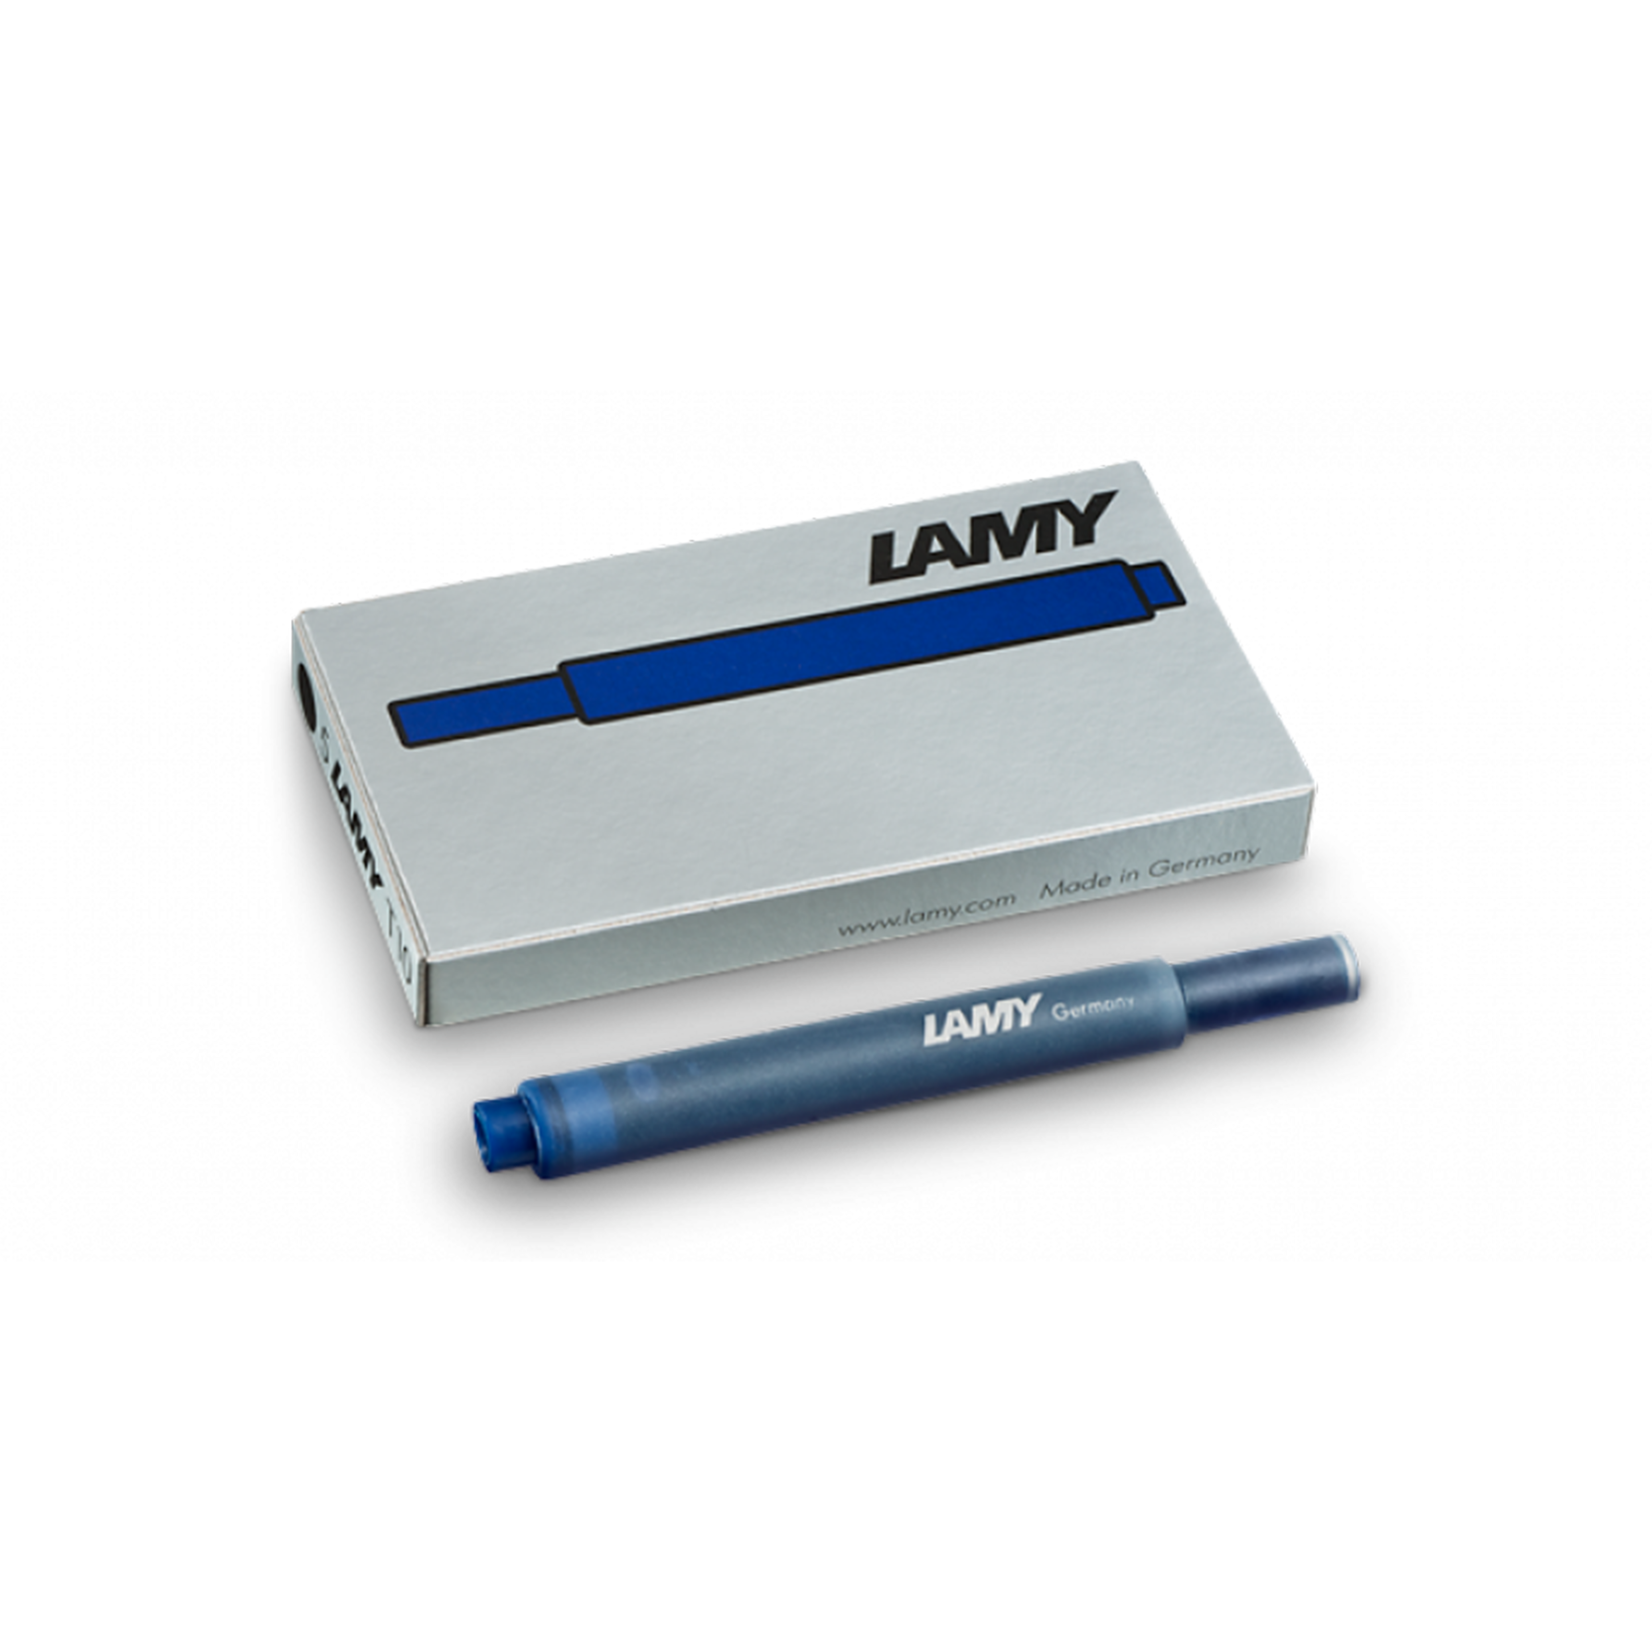 LAMY T10 Refill - Fountain Pen Ink Cartridges, Box of 5 (Blue)